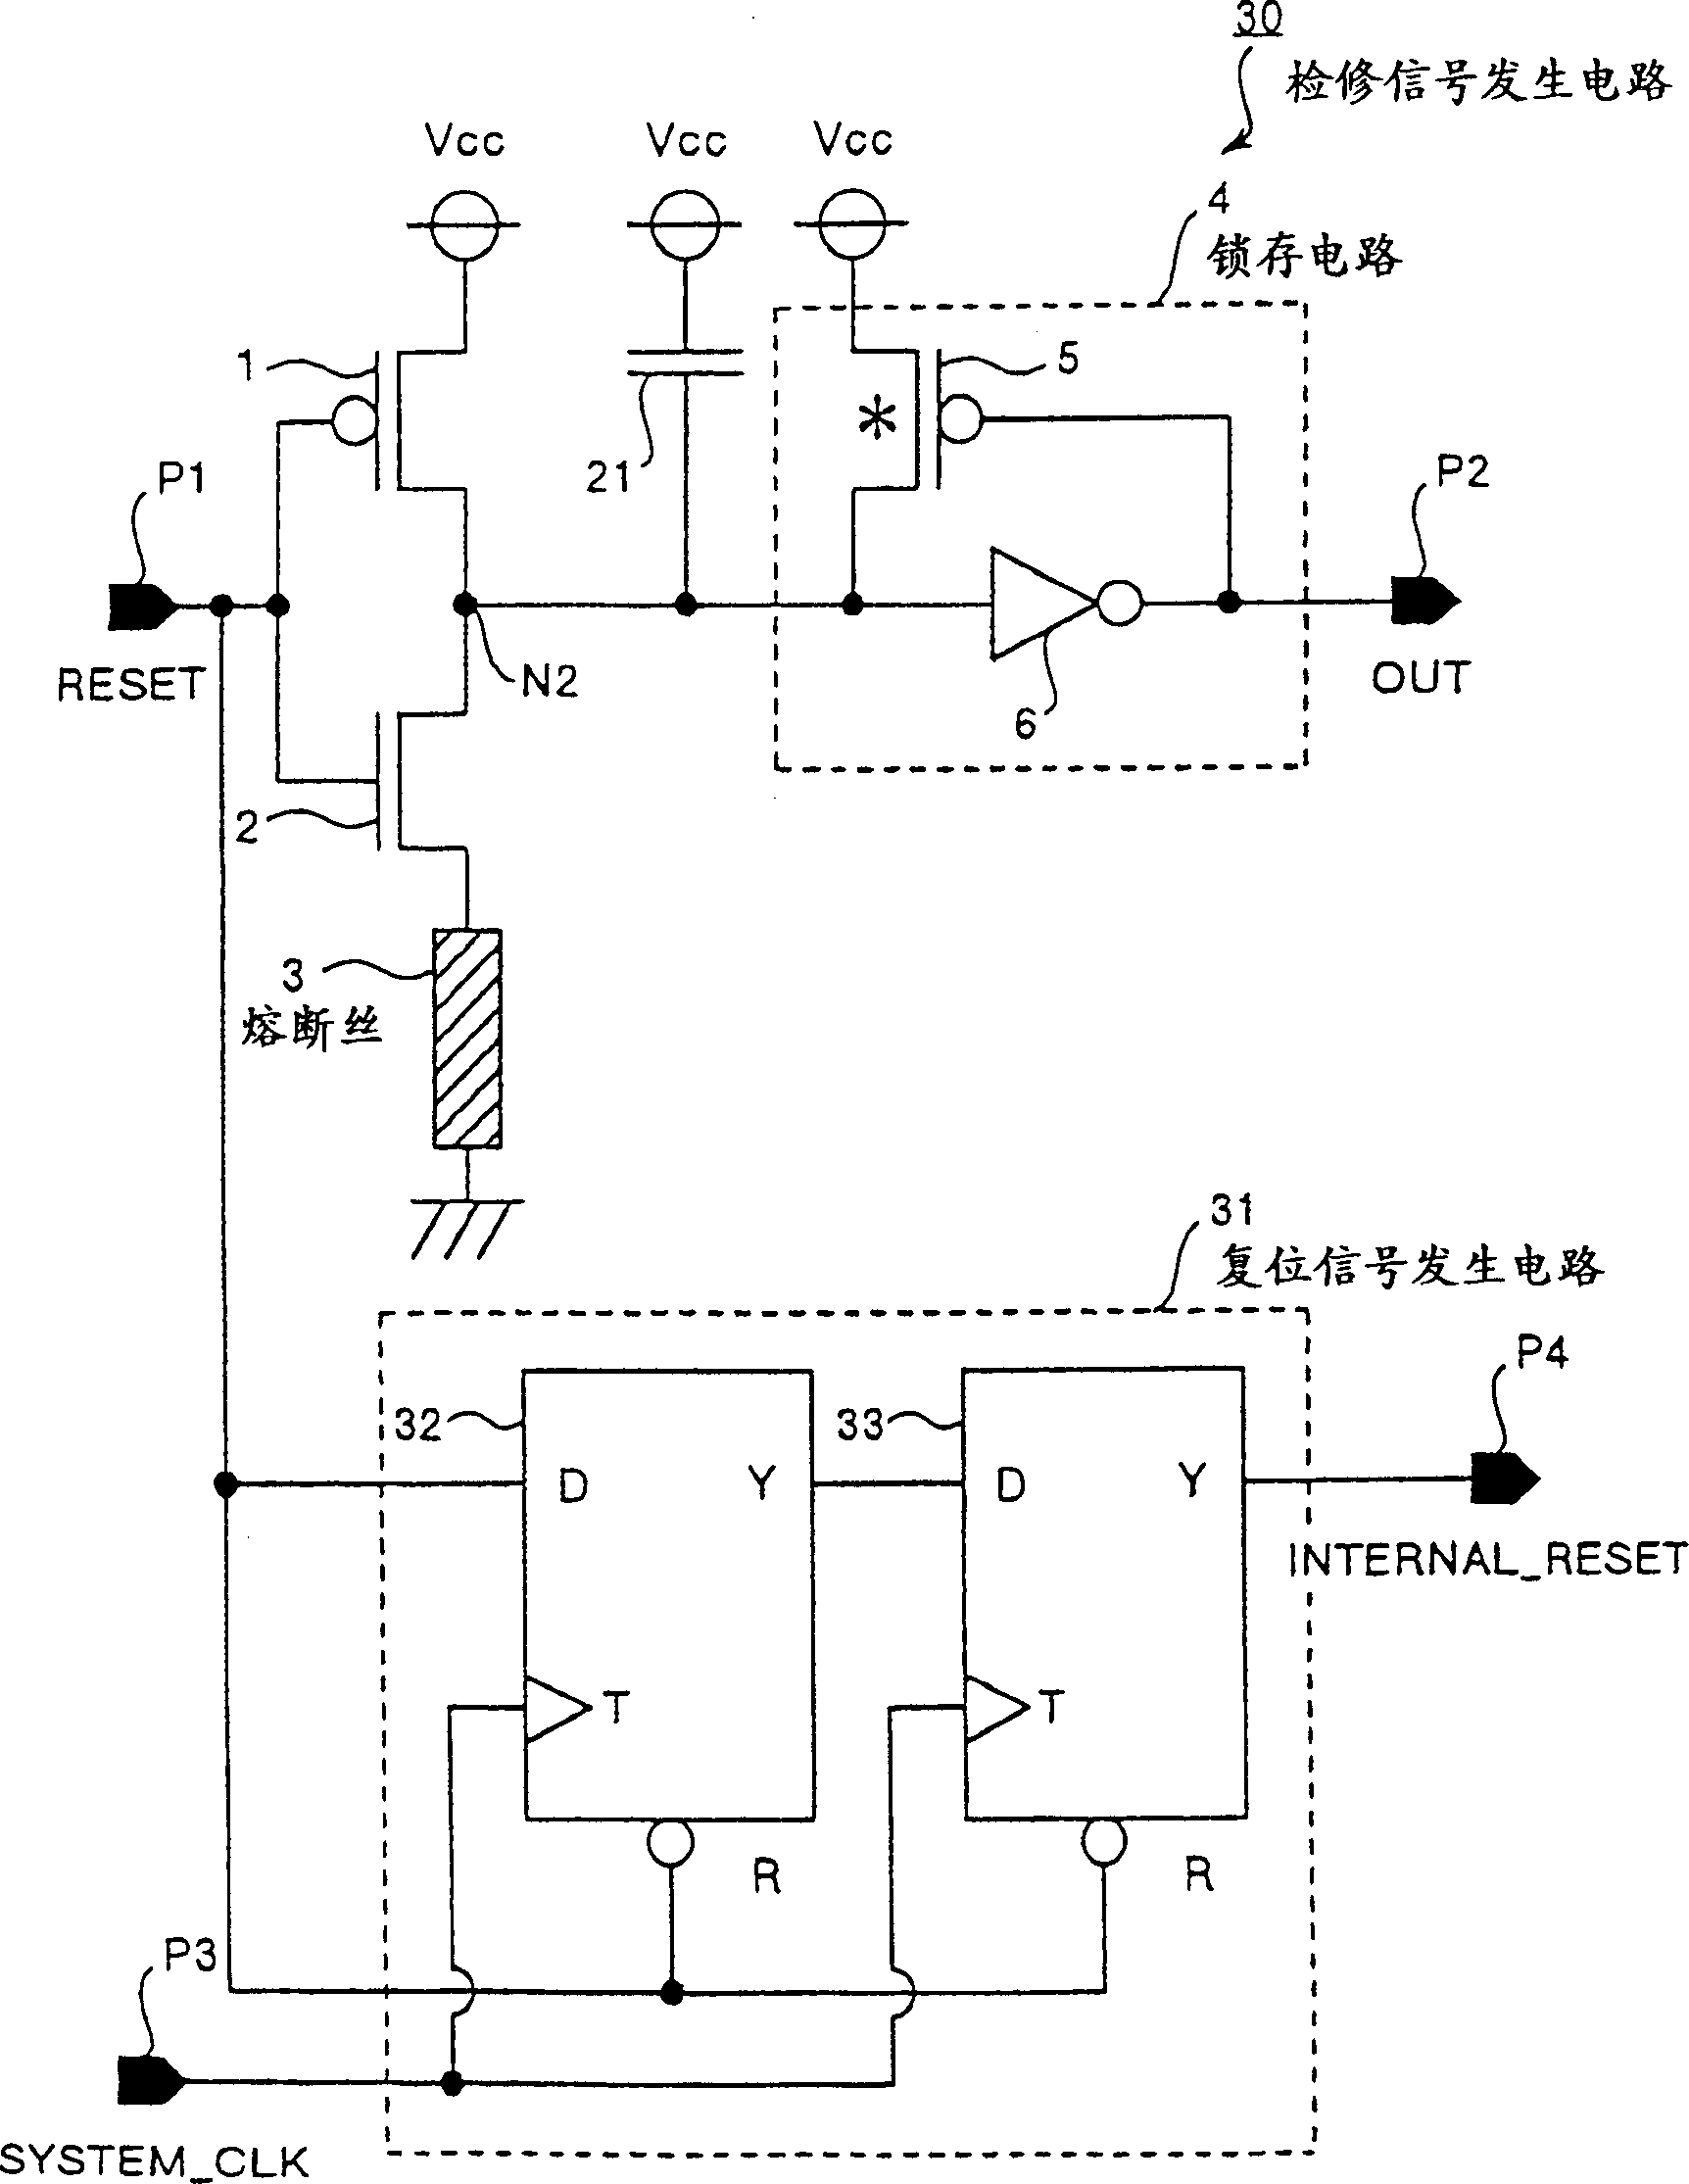 Service signal generating circuit